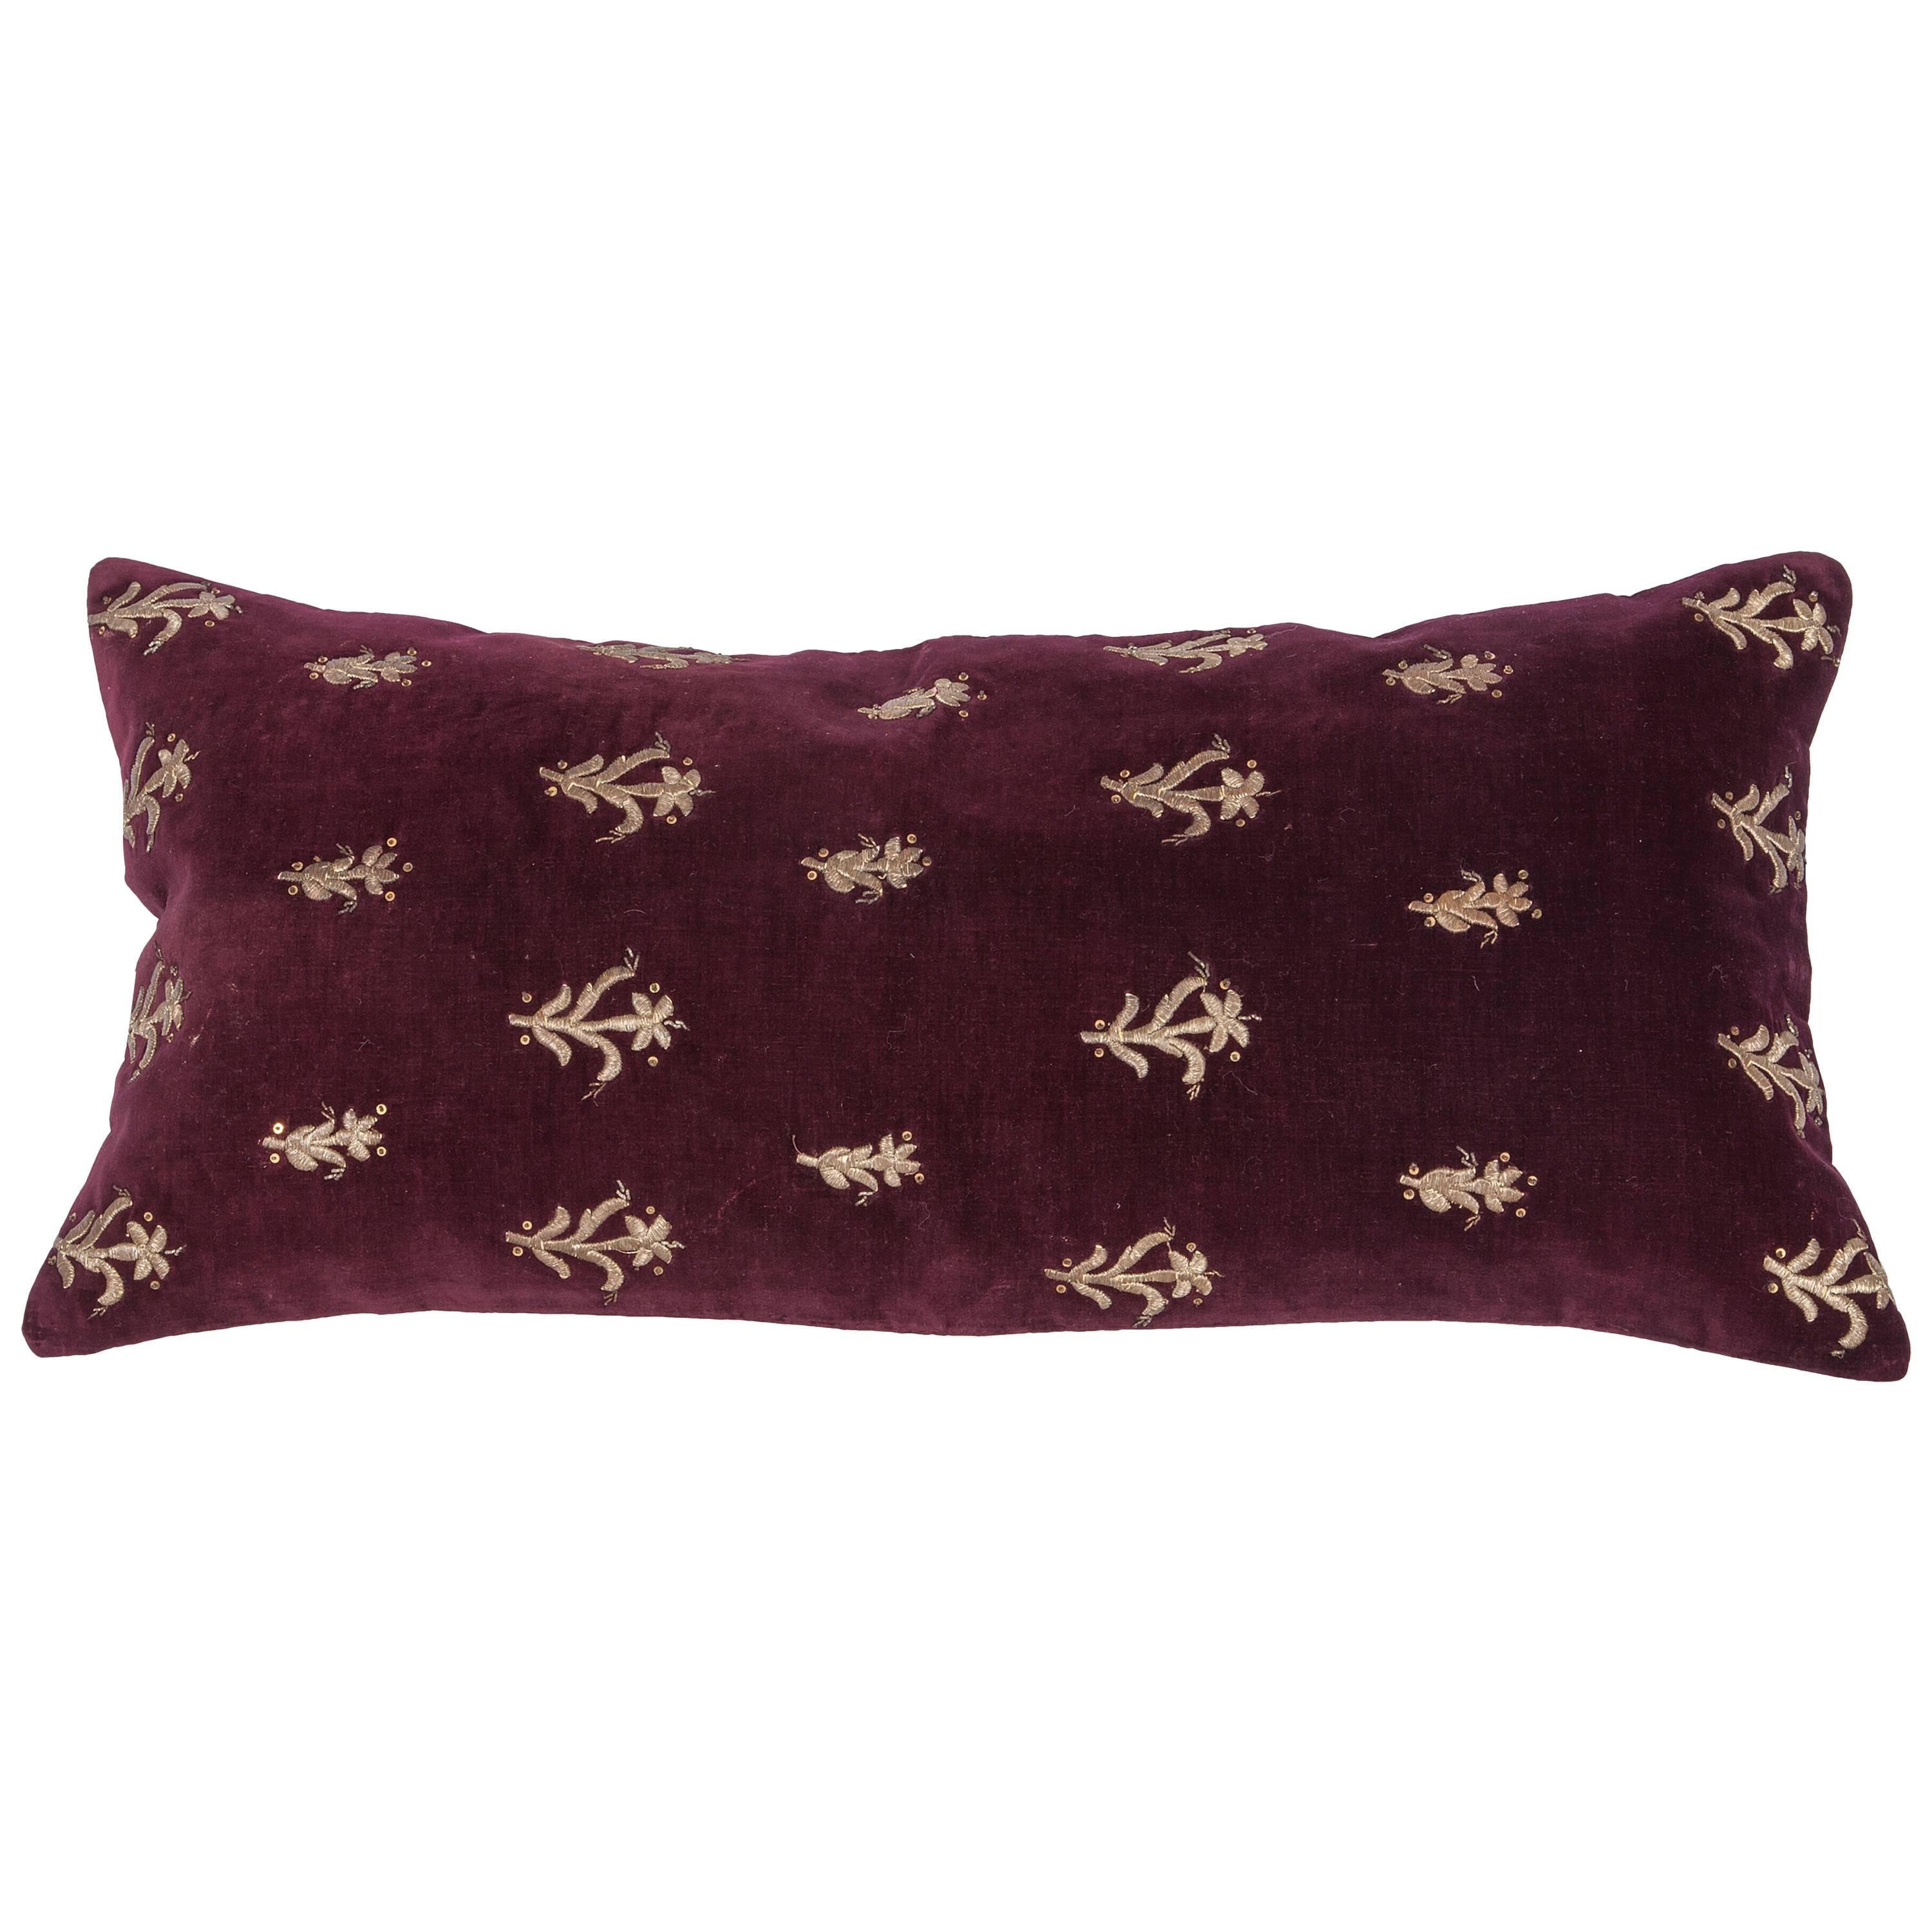 Late 19th Century Ottoman Sarma Technique Velvet Pillow